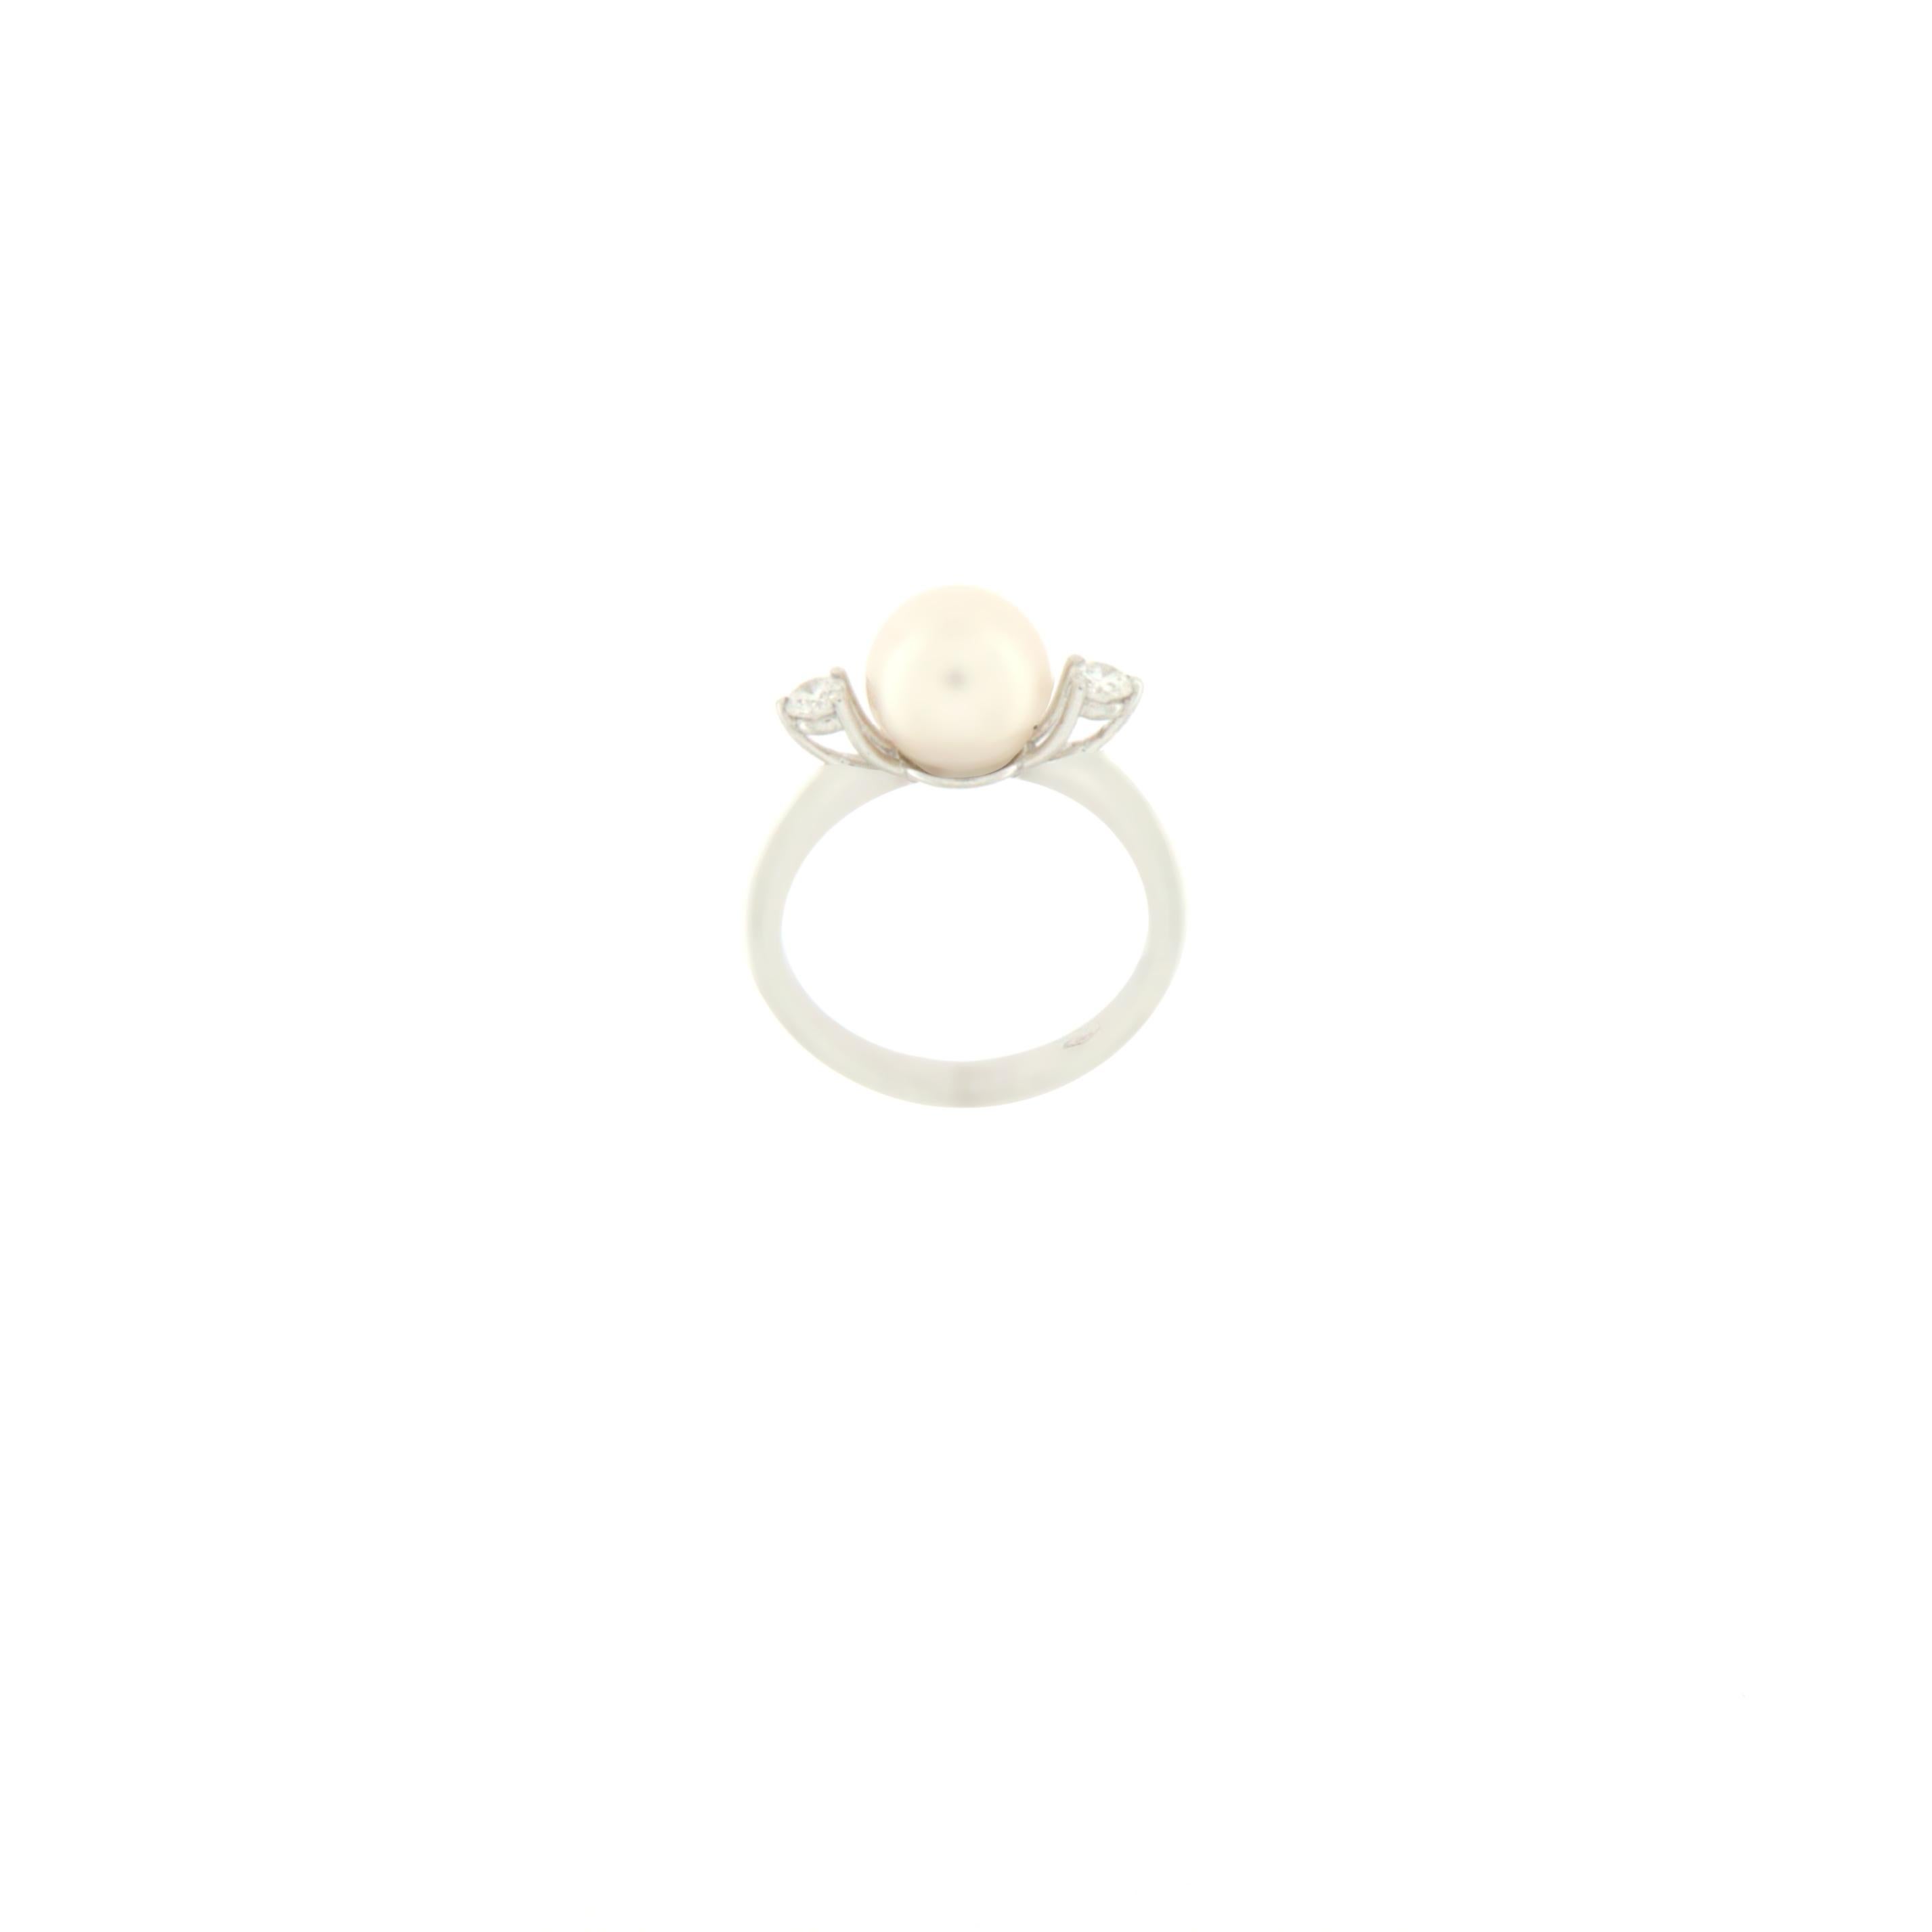 Brilliant Cut Pearl Diamonds 18 Karat White Gold Cocktail Ring